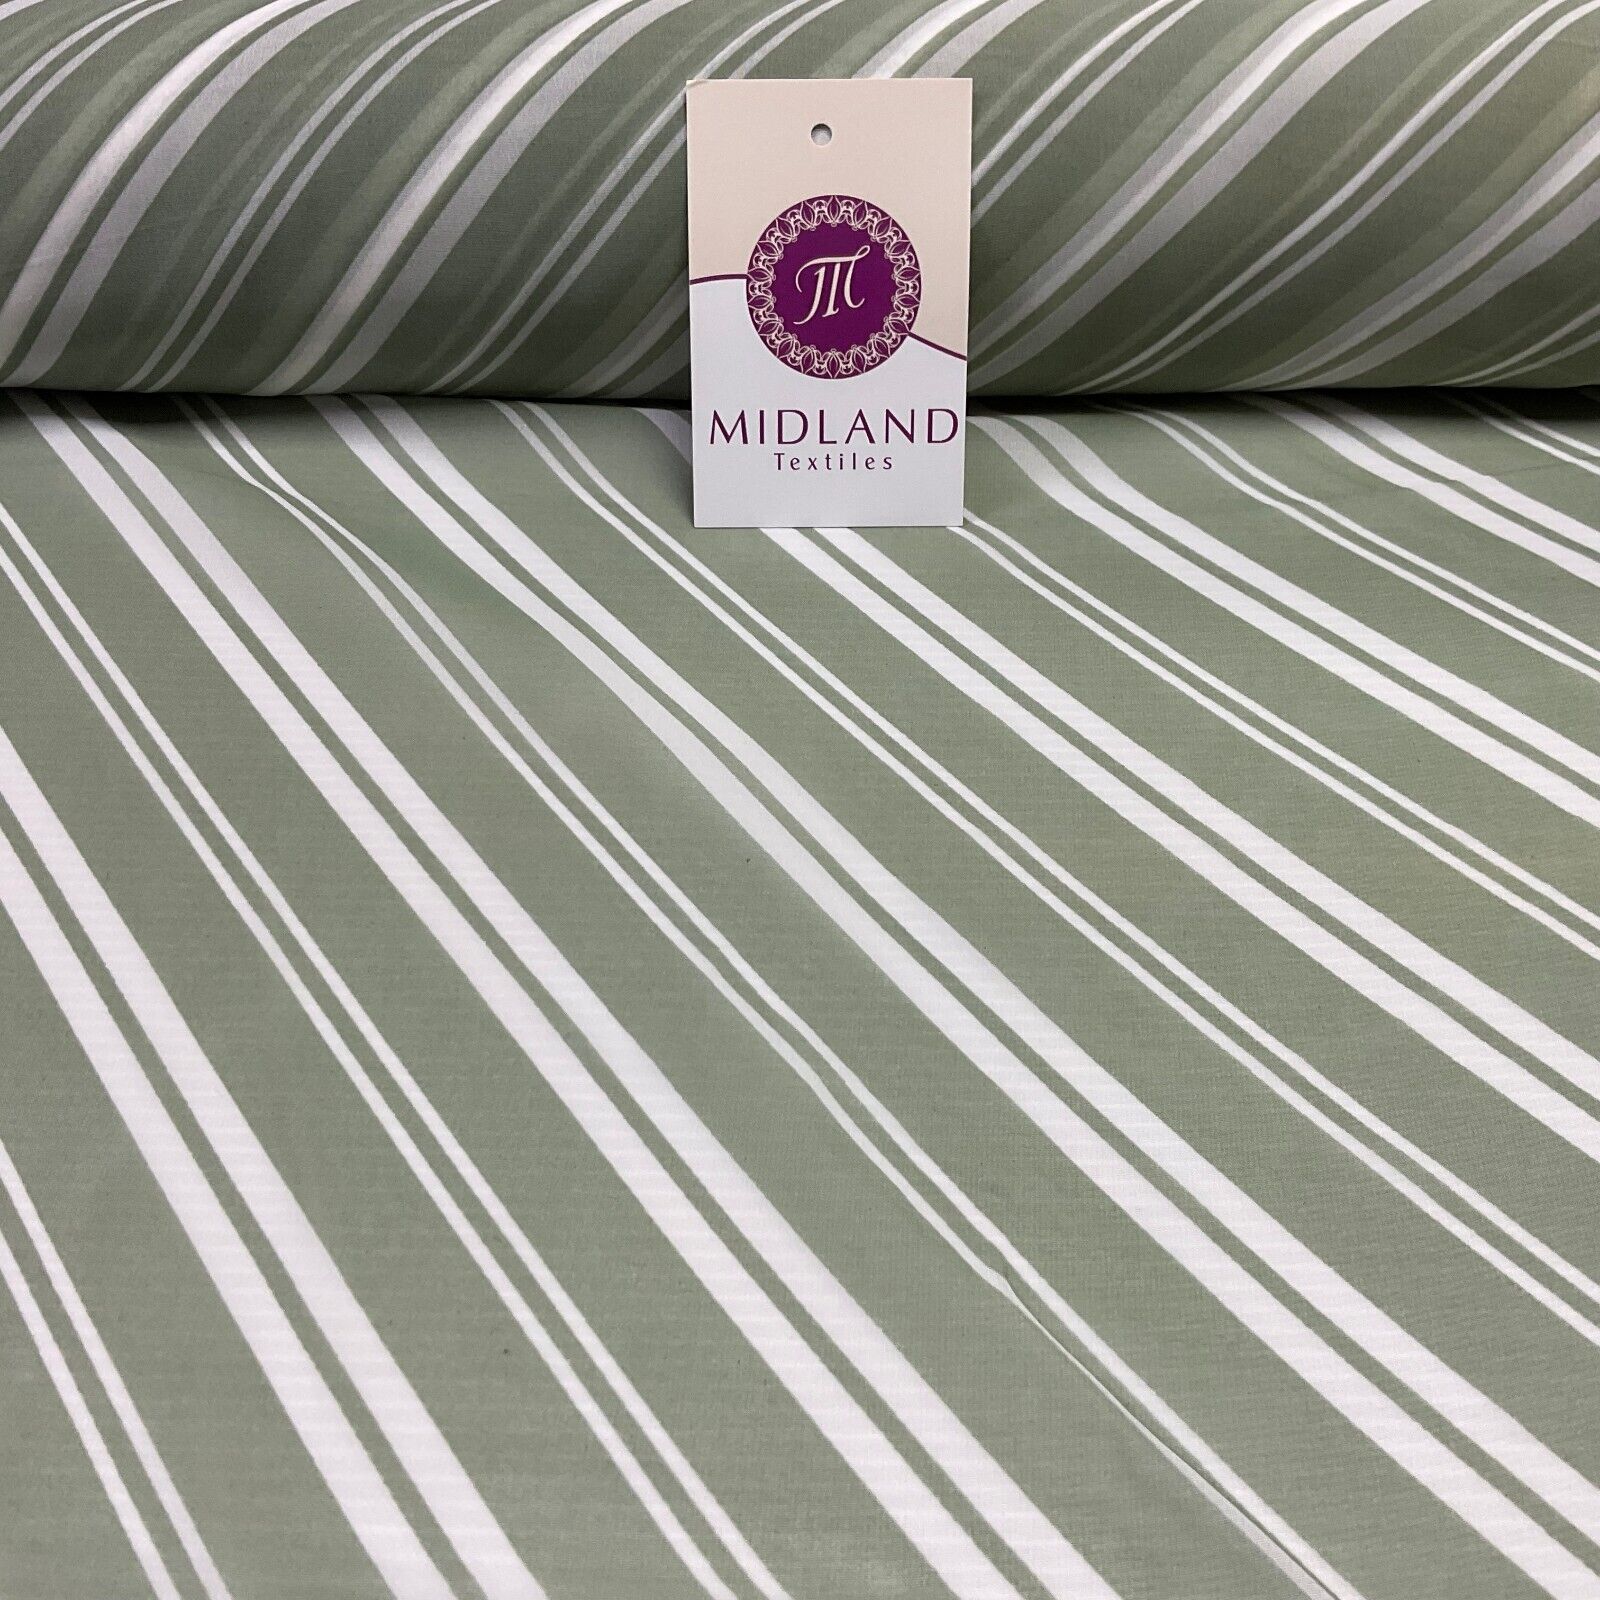 Diagonal Striped Chiffon Sheer, Flowy dress blouse fabric 58 inches wide M1746